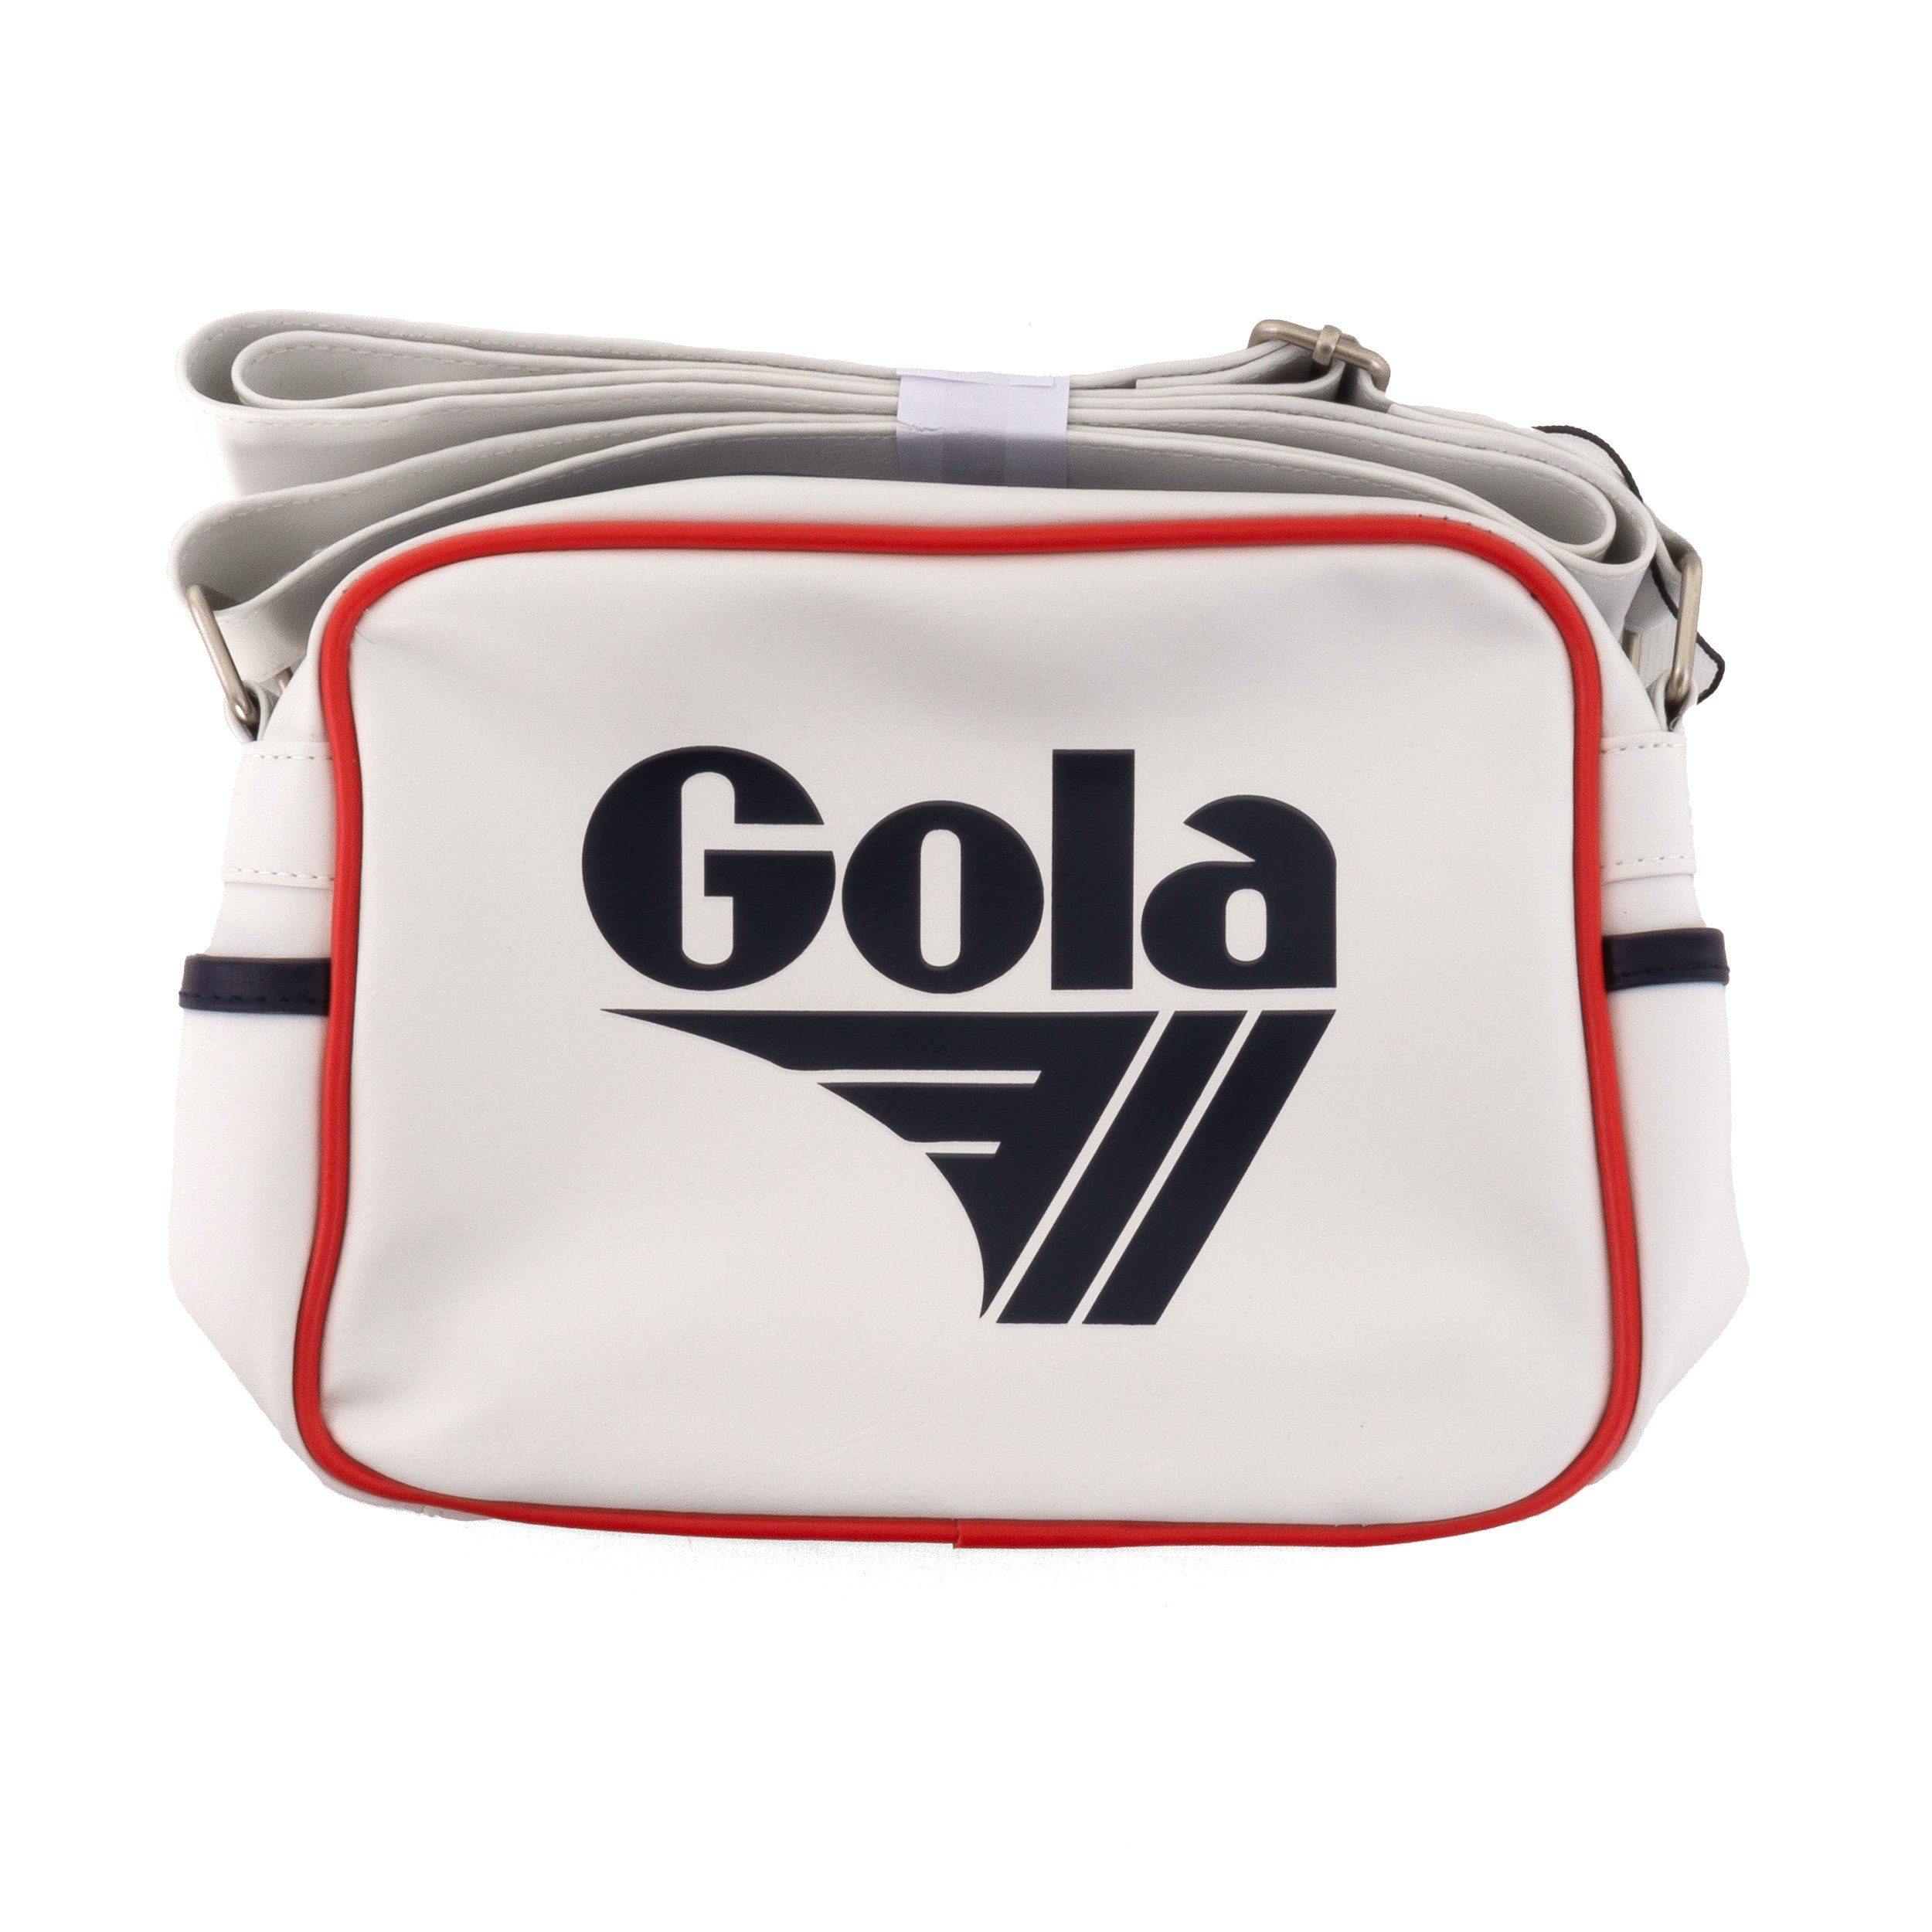 Gola Small Schultertasche Micro Bag Tasche white/navy/rot Gola Redford Schultertasche